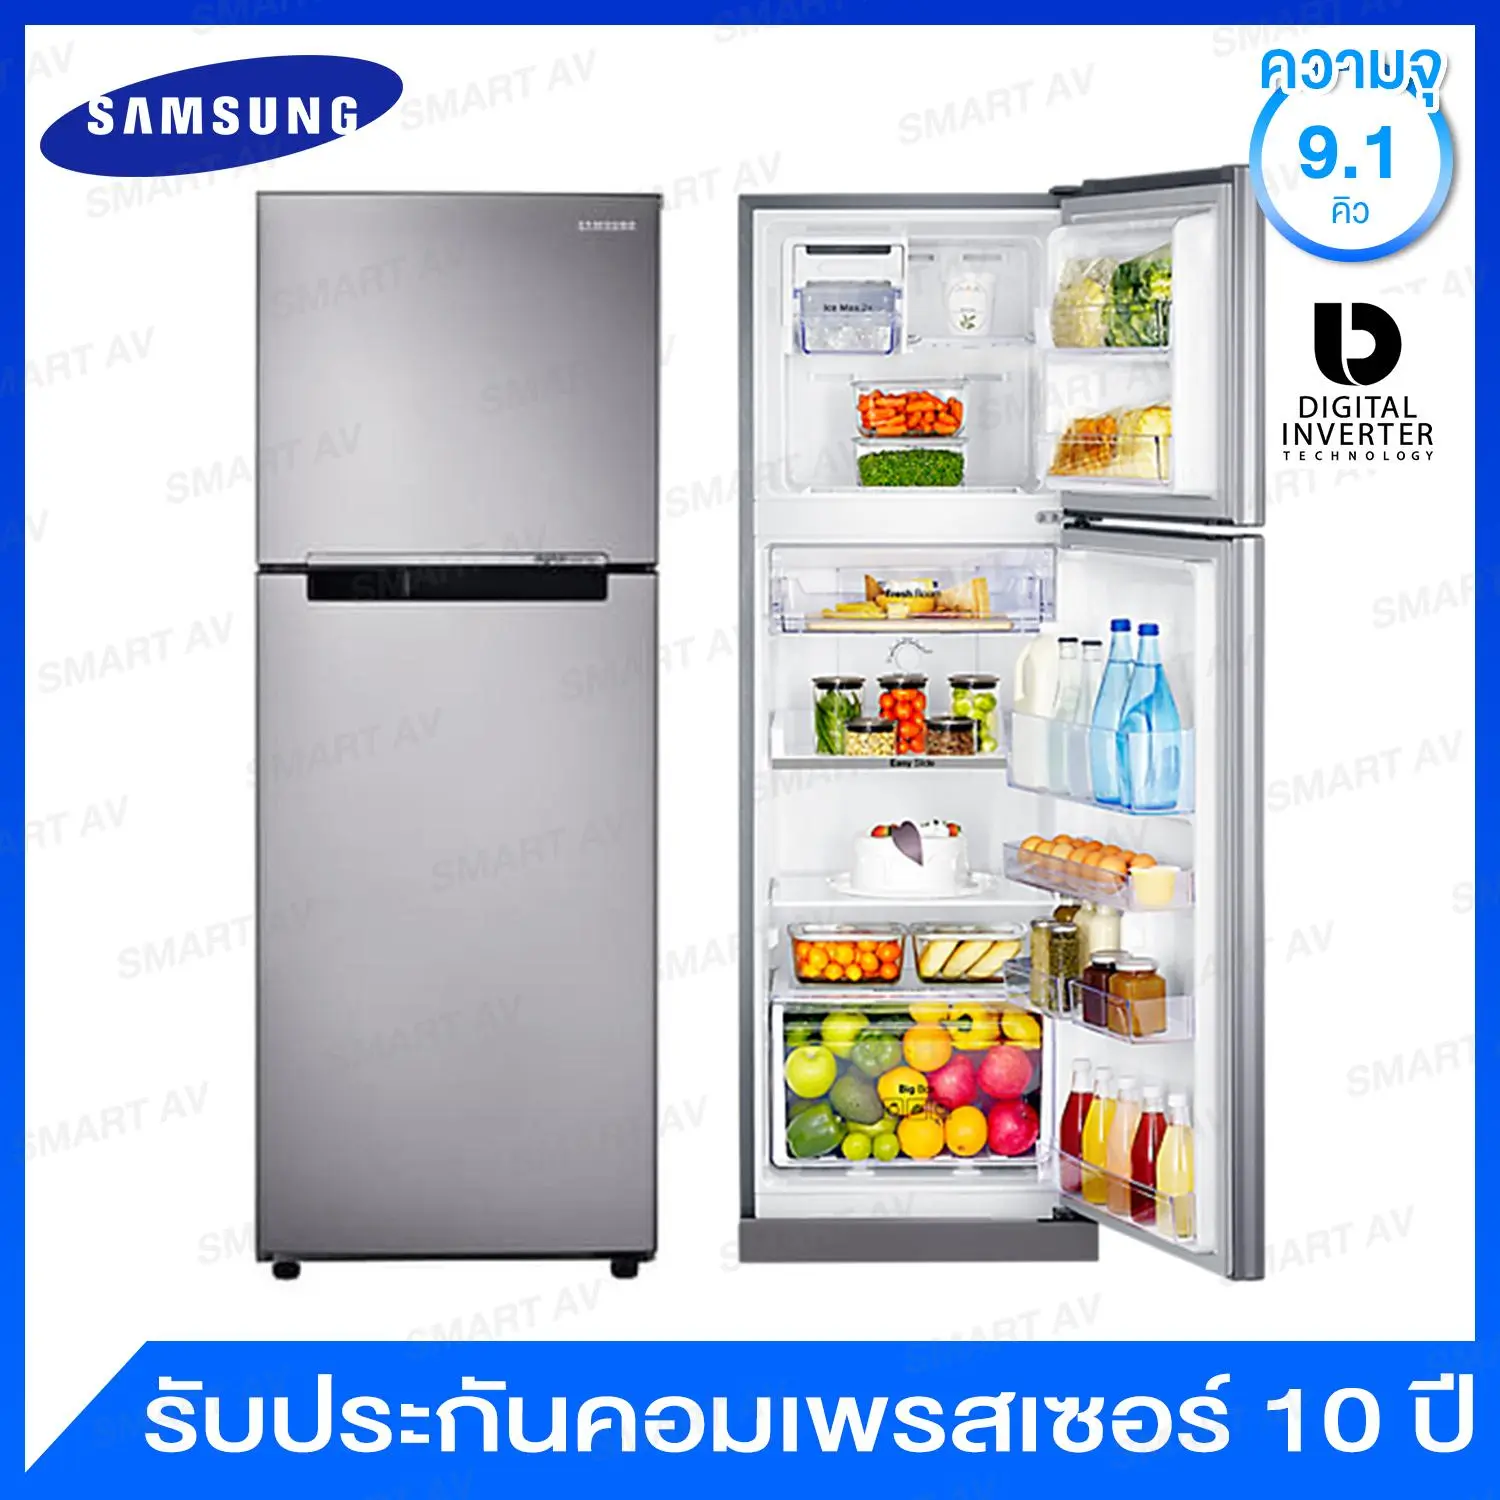 Samsung ตู้เย็น 2 ประตู ความจุ 9.1 คิว ระบบ Digital Inverter พร้อมระบบดูดกลิ่น และ Twist Ice Maker รุ่น RT-25FGRADSA